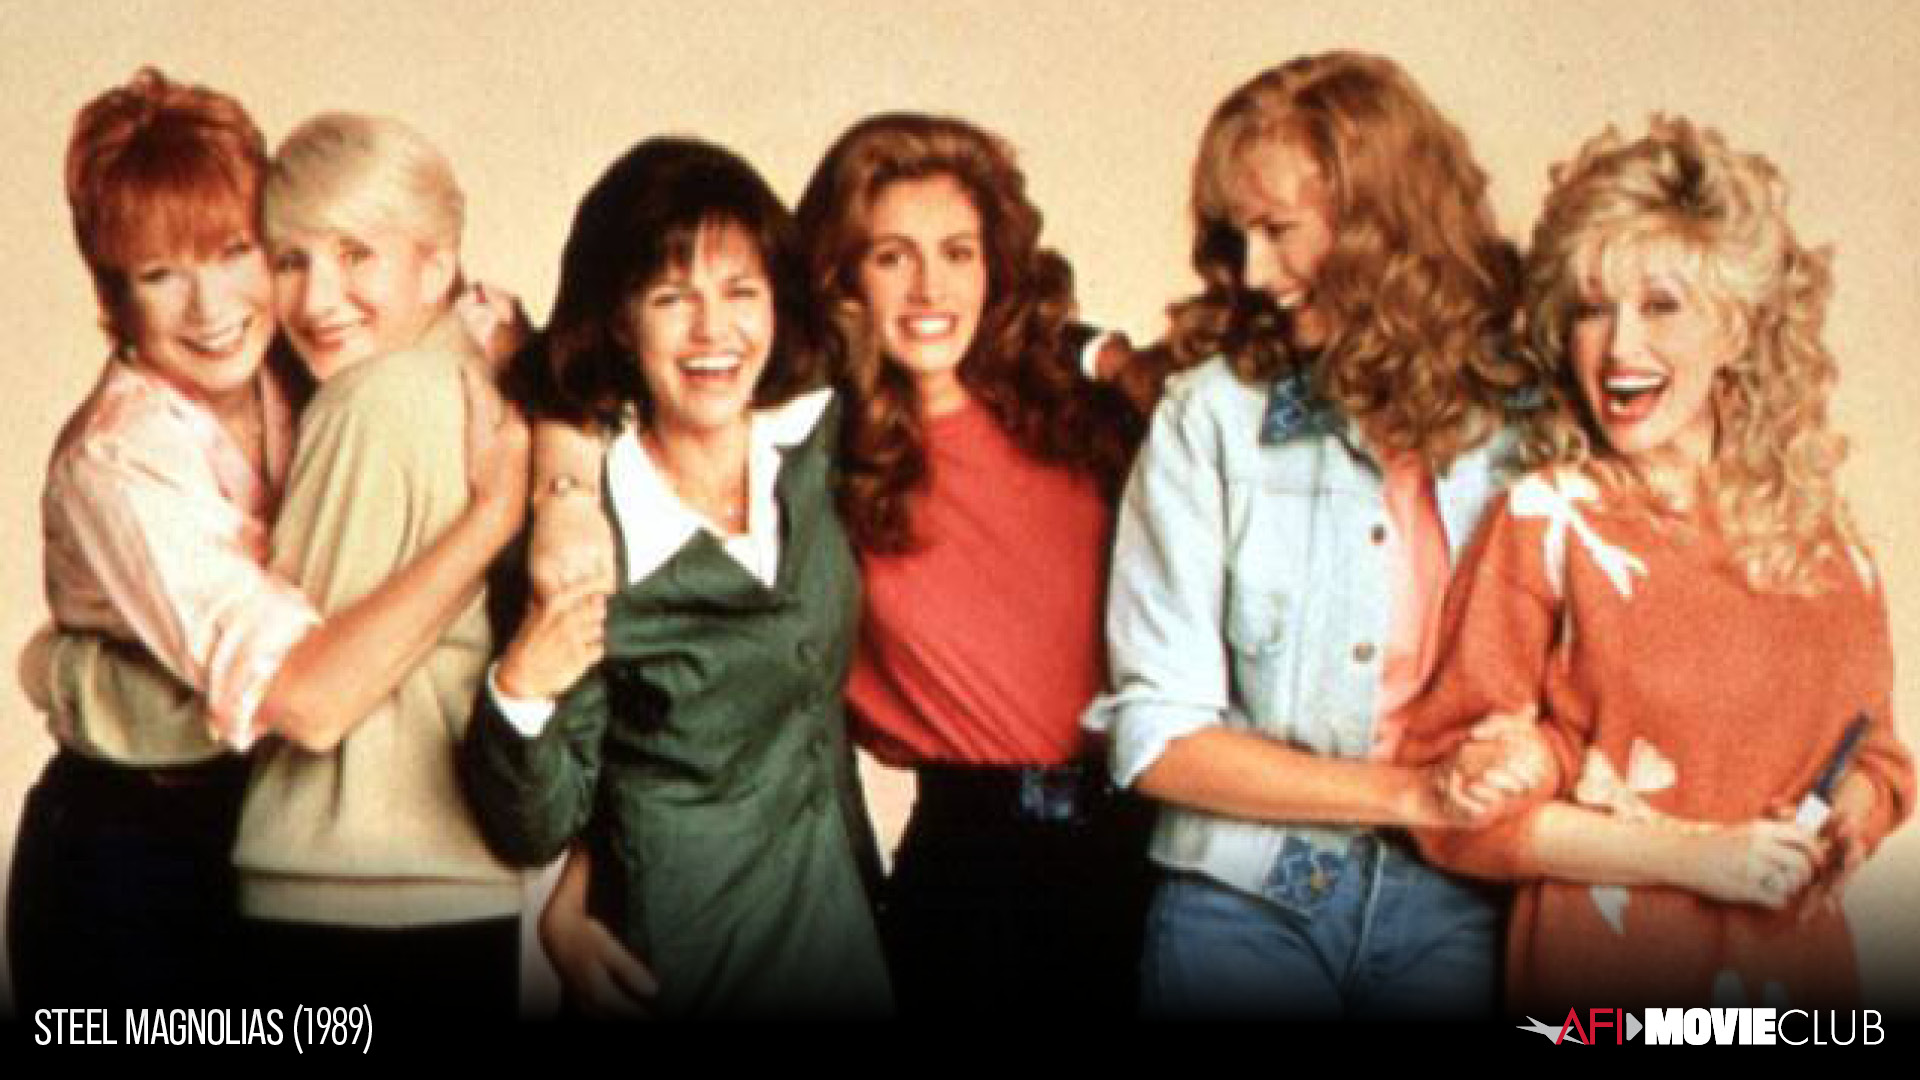 Steel Magnolias Film Still - Julia Roberts, Sally Field, Shirley MacLaine, Dolly Parton, and Olympia Dukakis